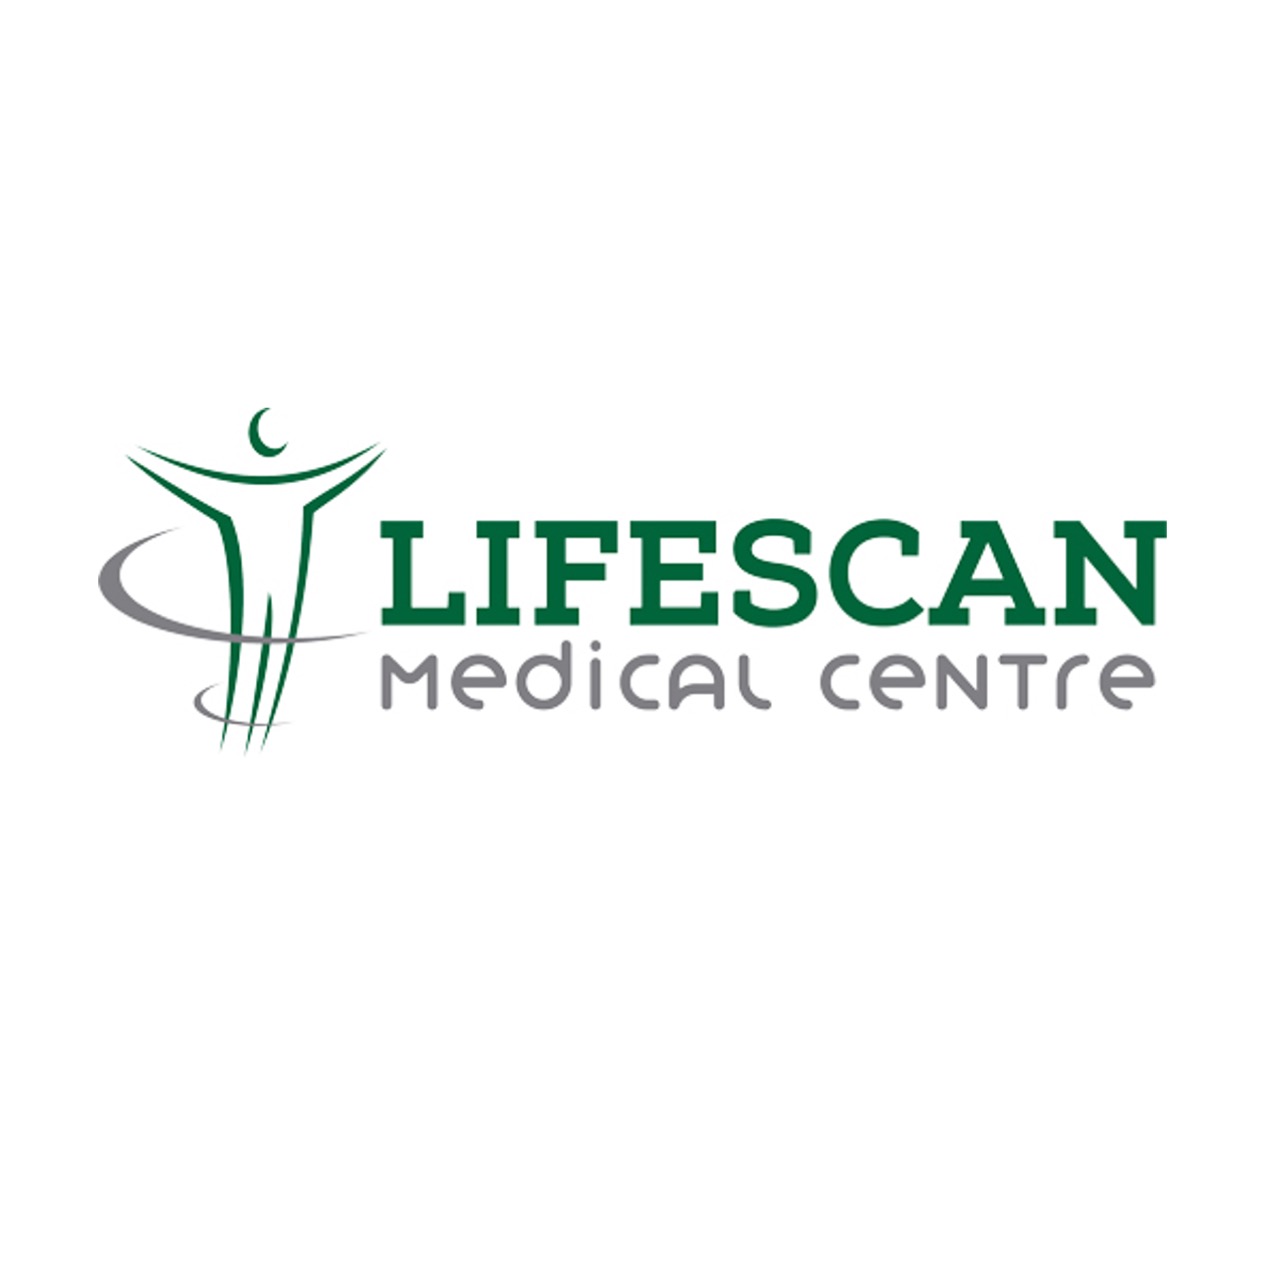 Lifescan Medical Centre